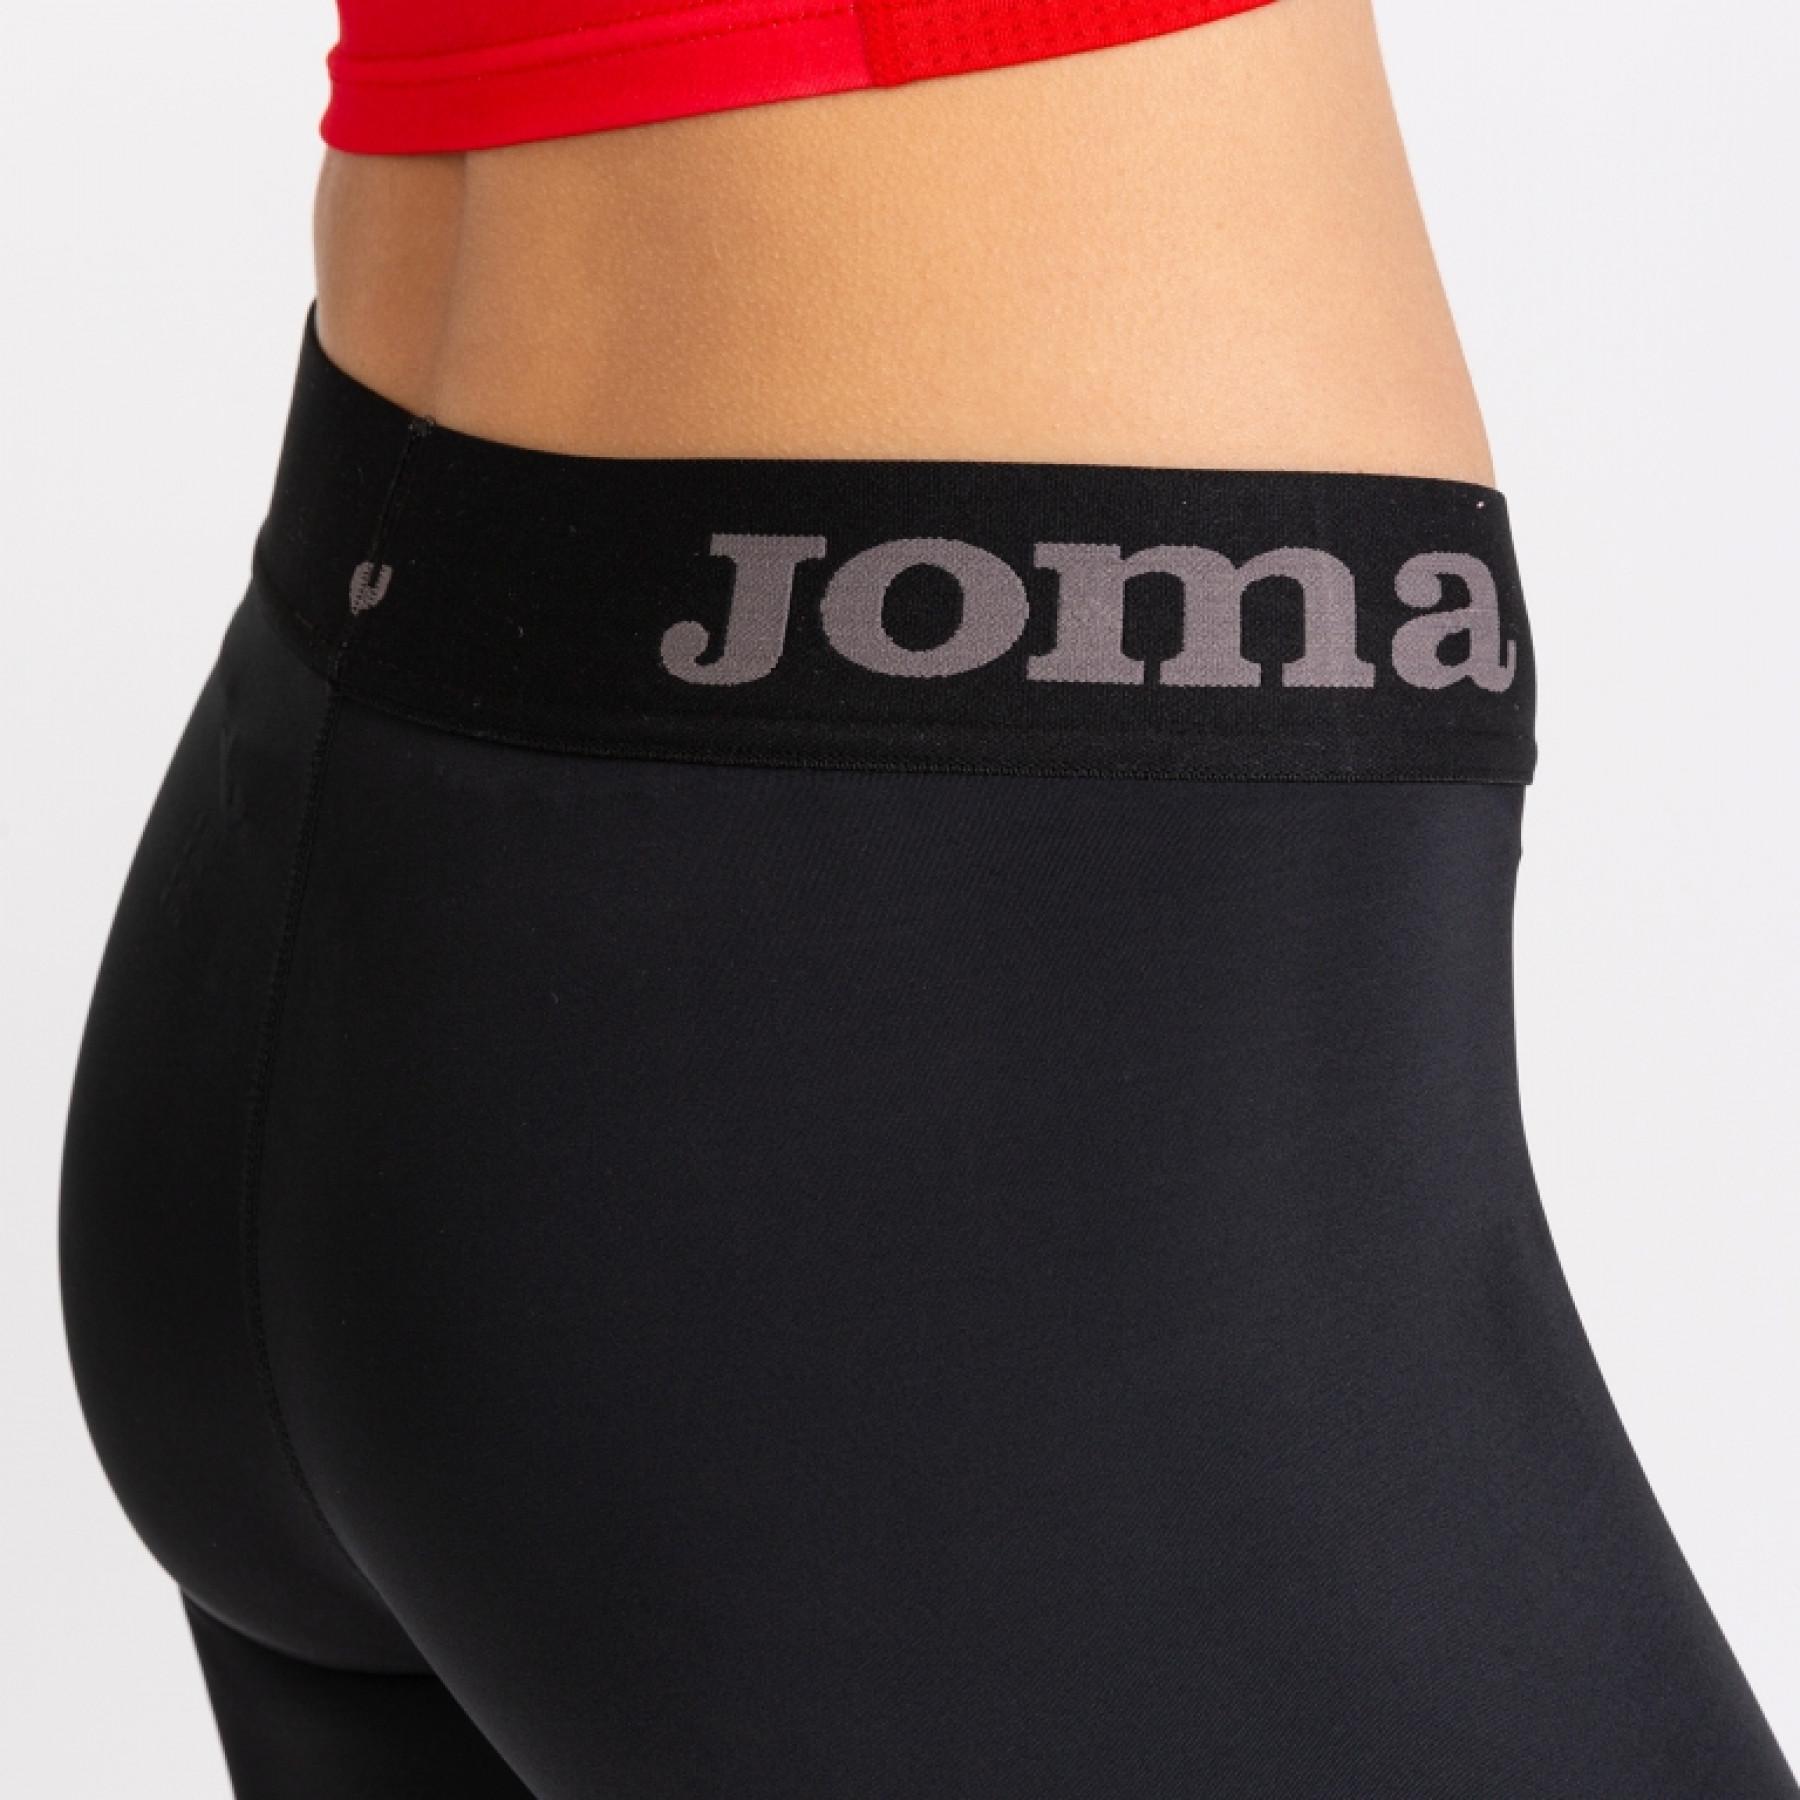 Spodnie kompresyjne dla kobiet Joma